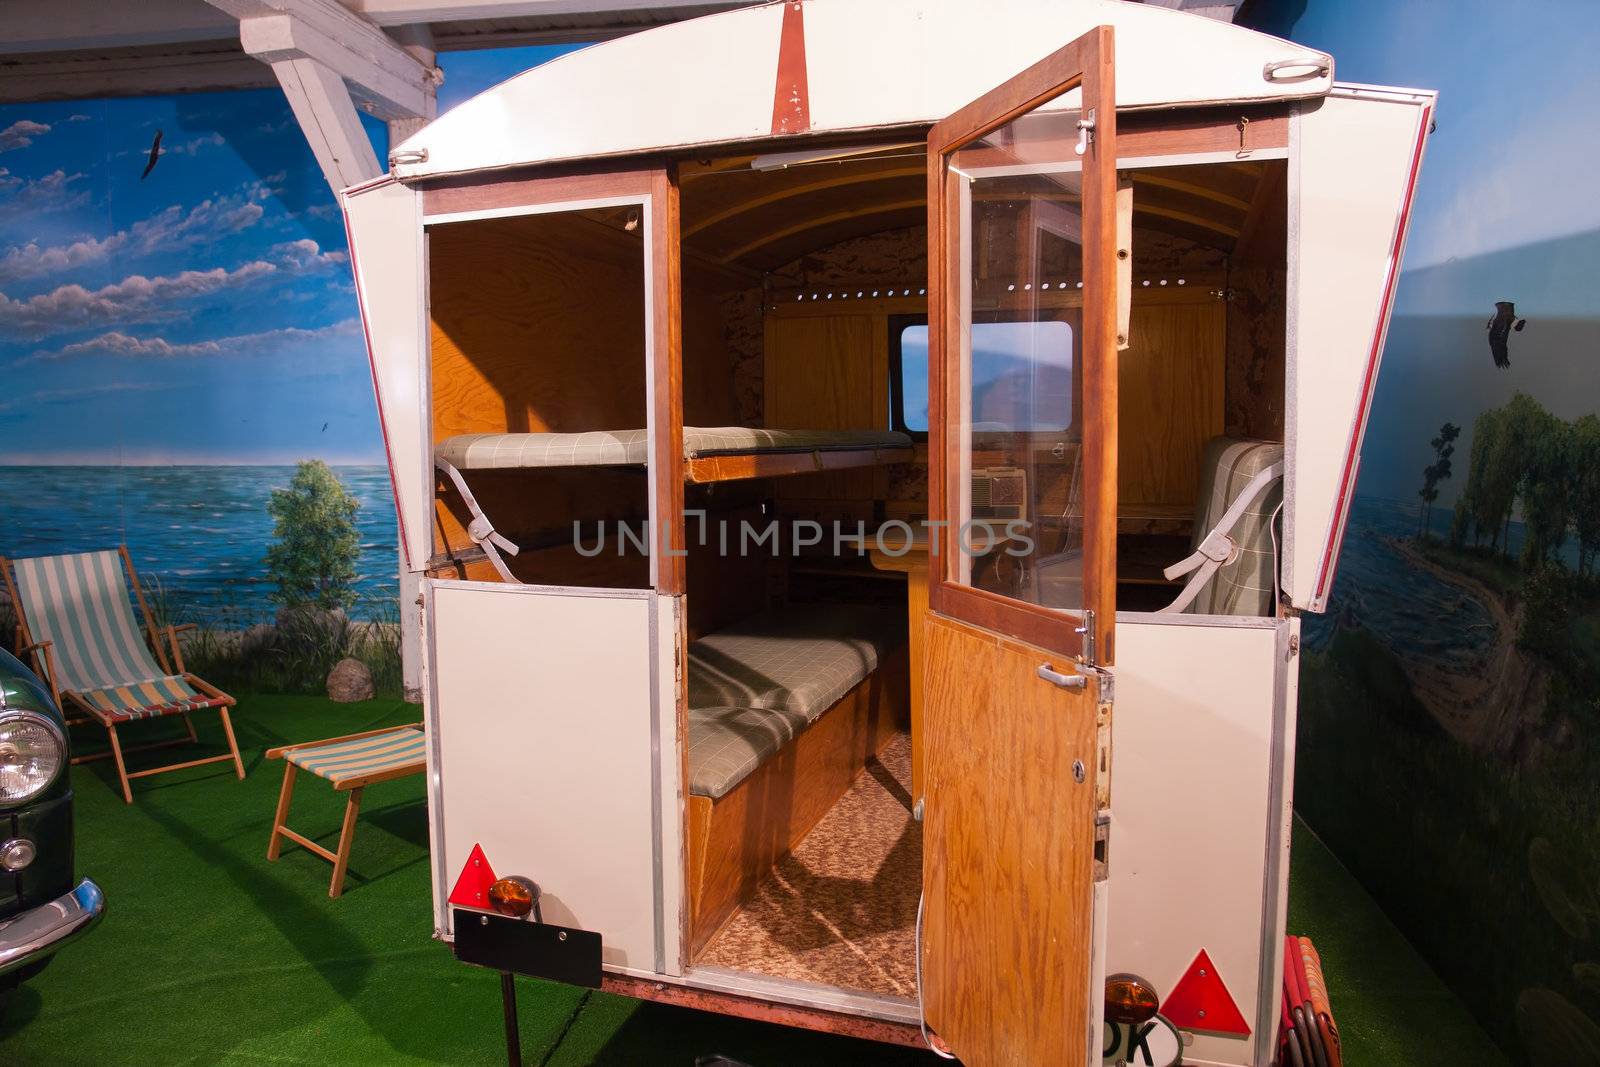 Vintage classical 50s 60s retro camper caravan with an armchair